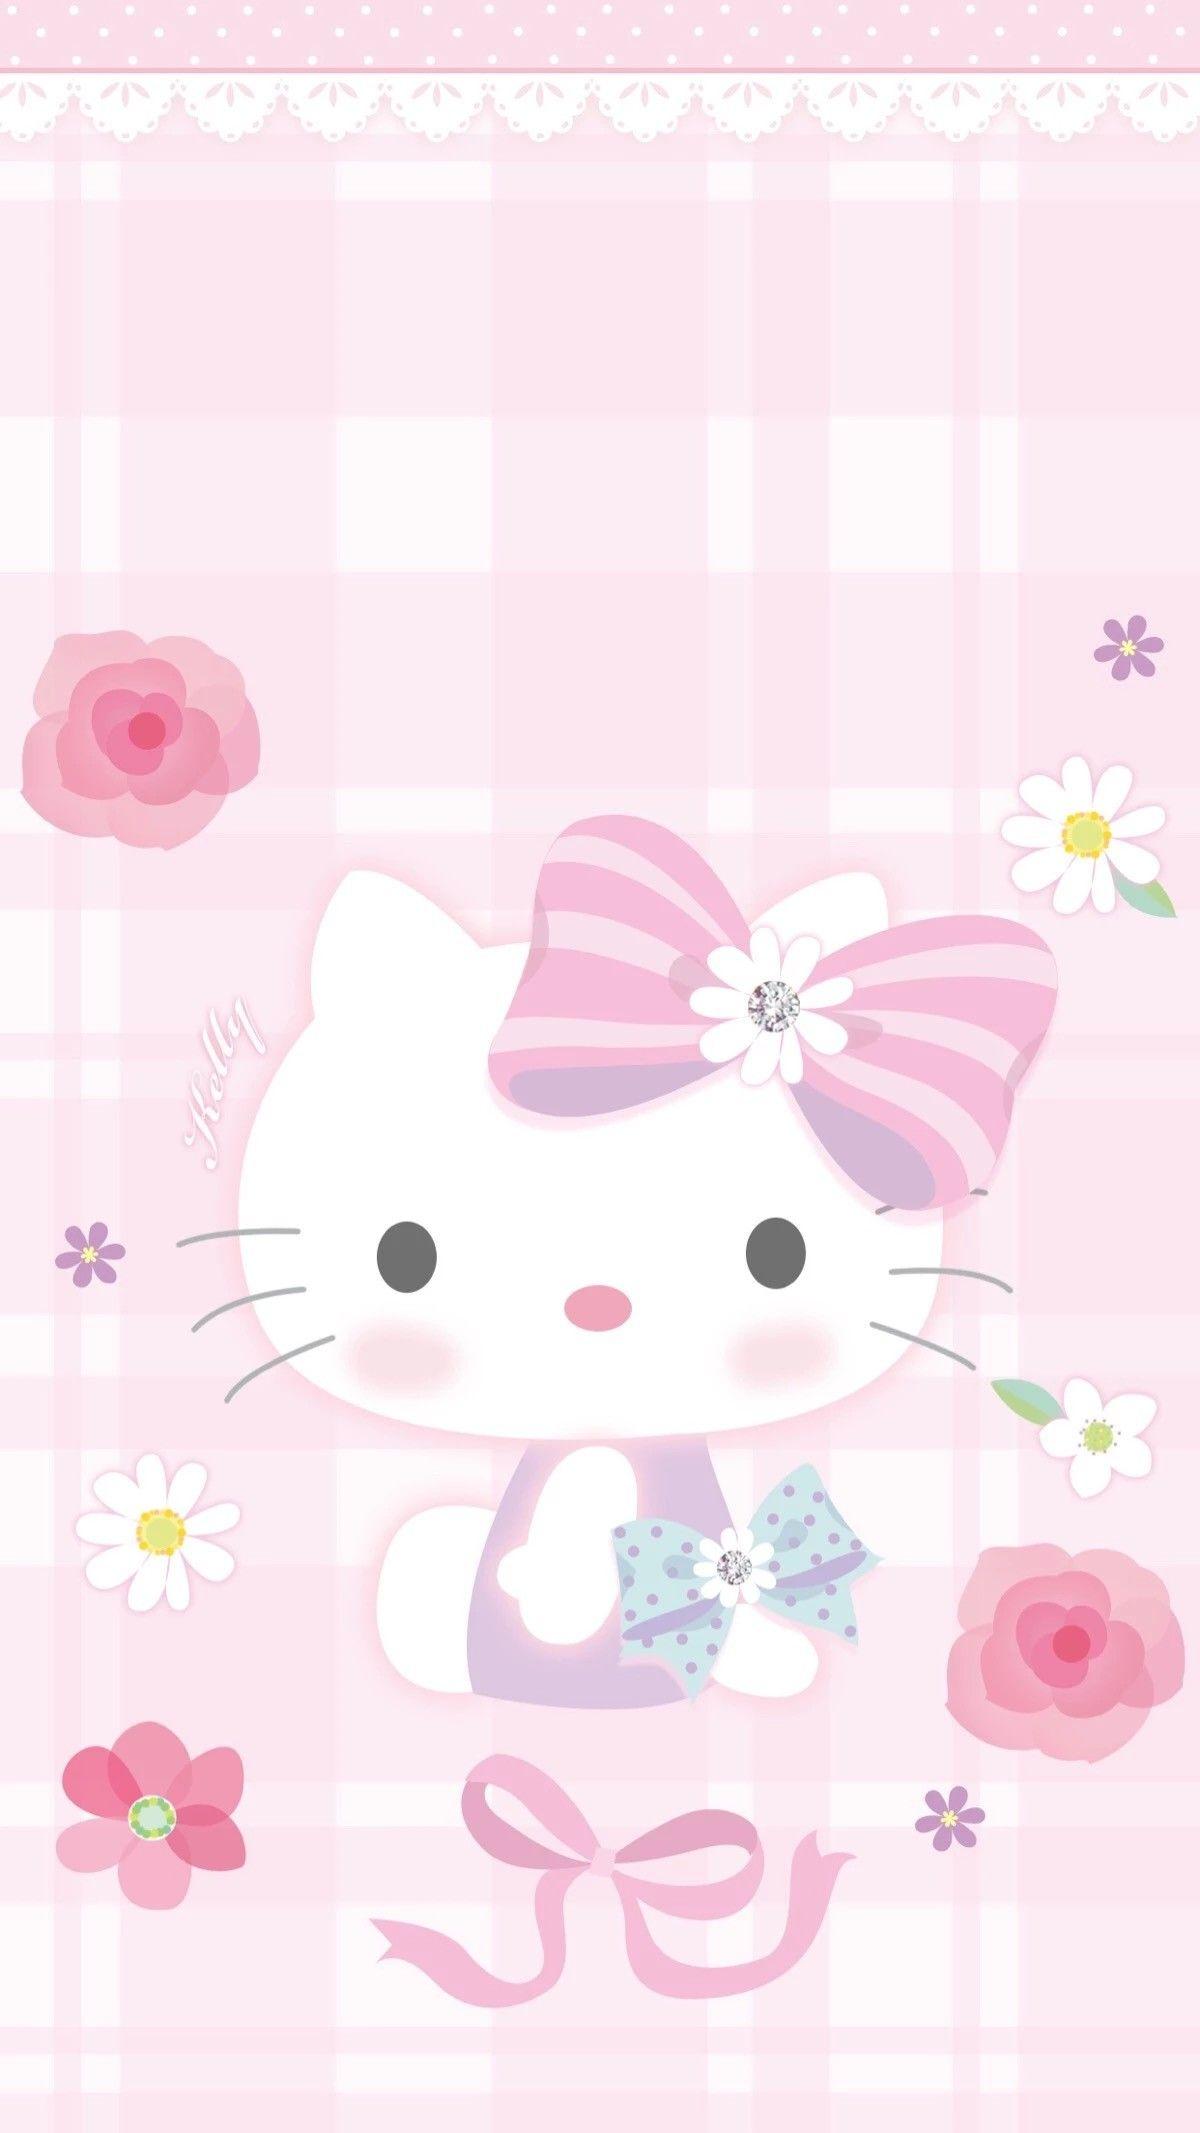 convert2iphone.com | Hello kitty wallpaper hd, Hello kitty iphone  wallpaper, Hello kitty wallpaper